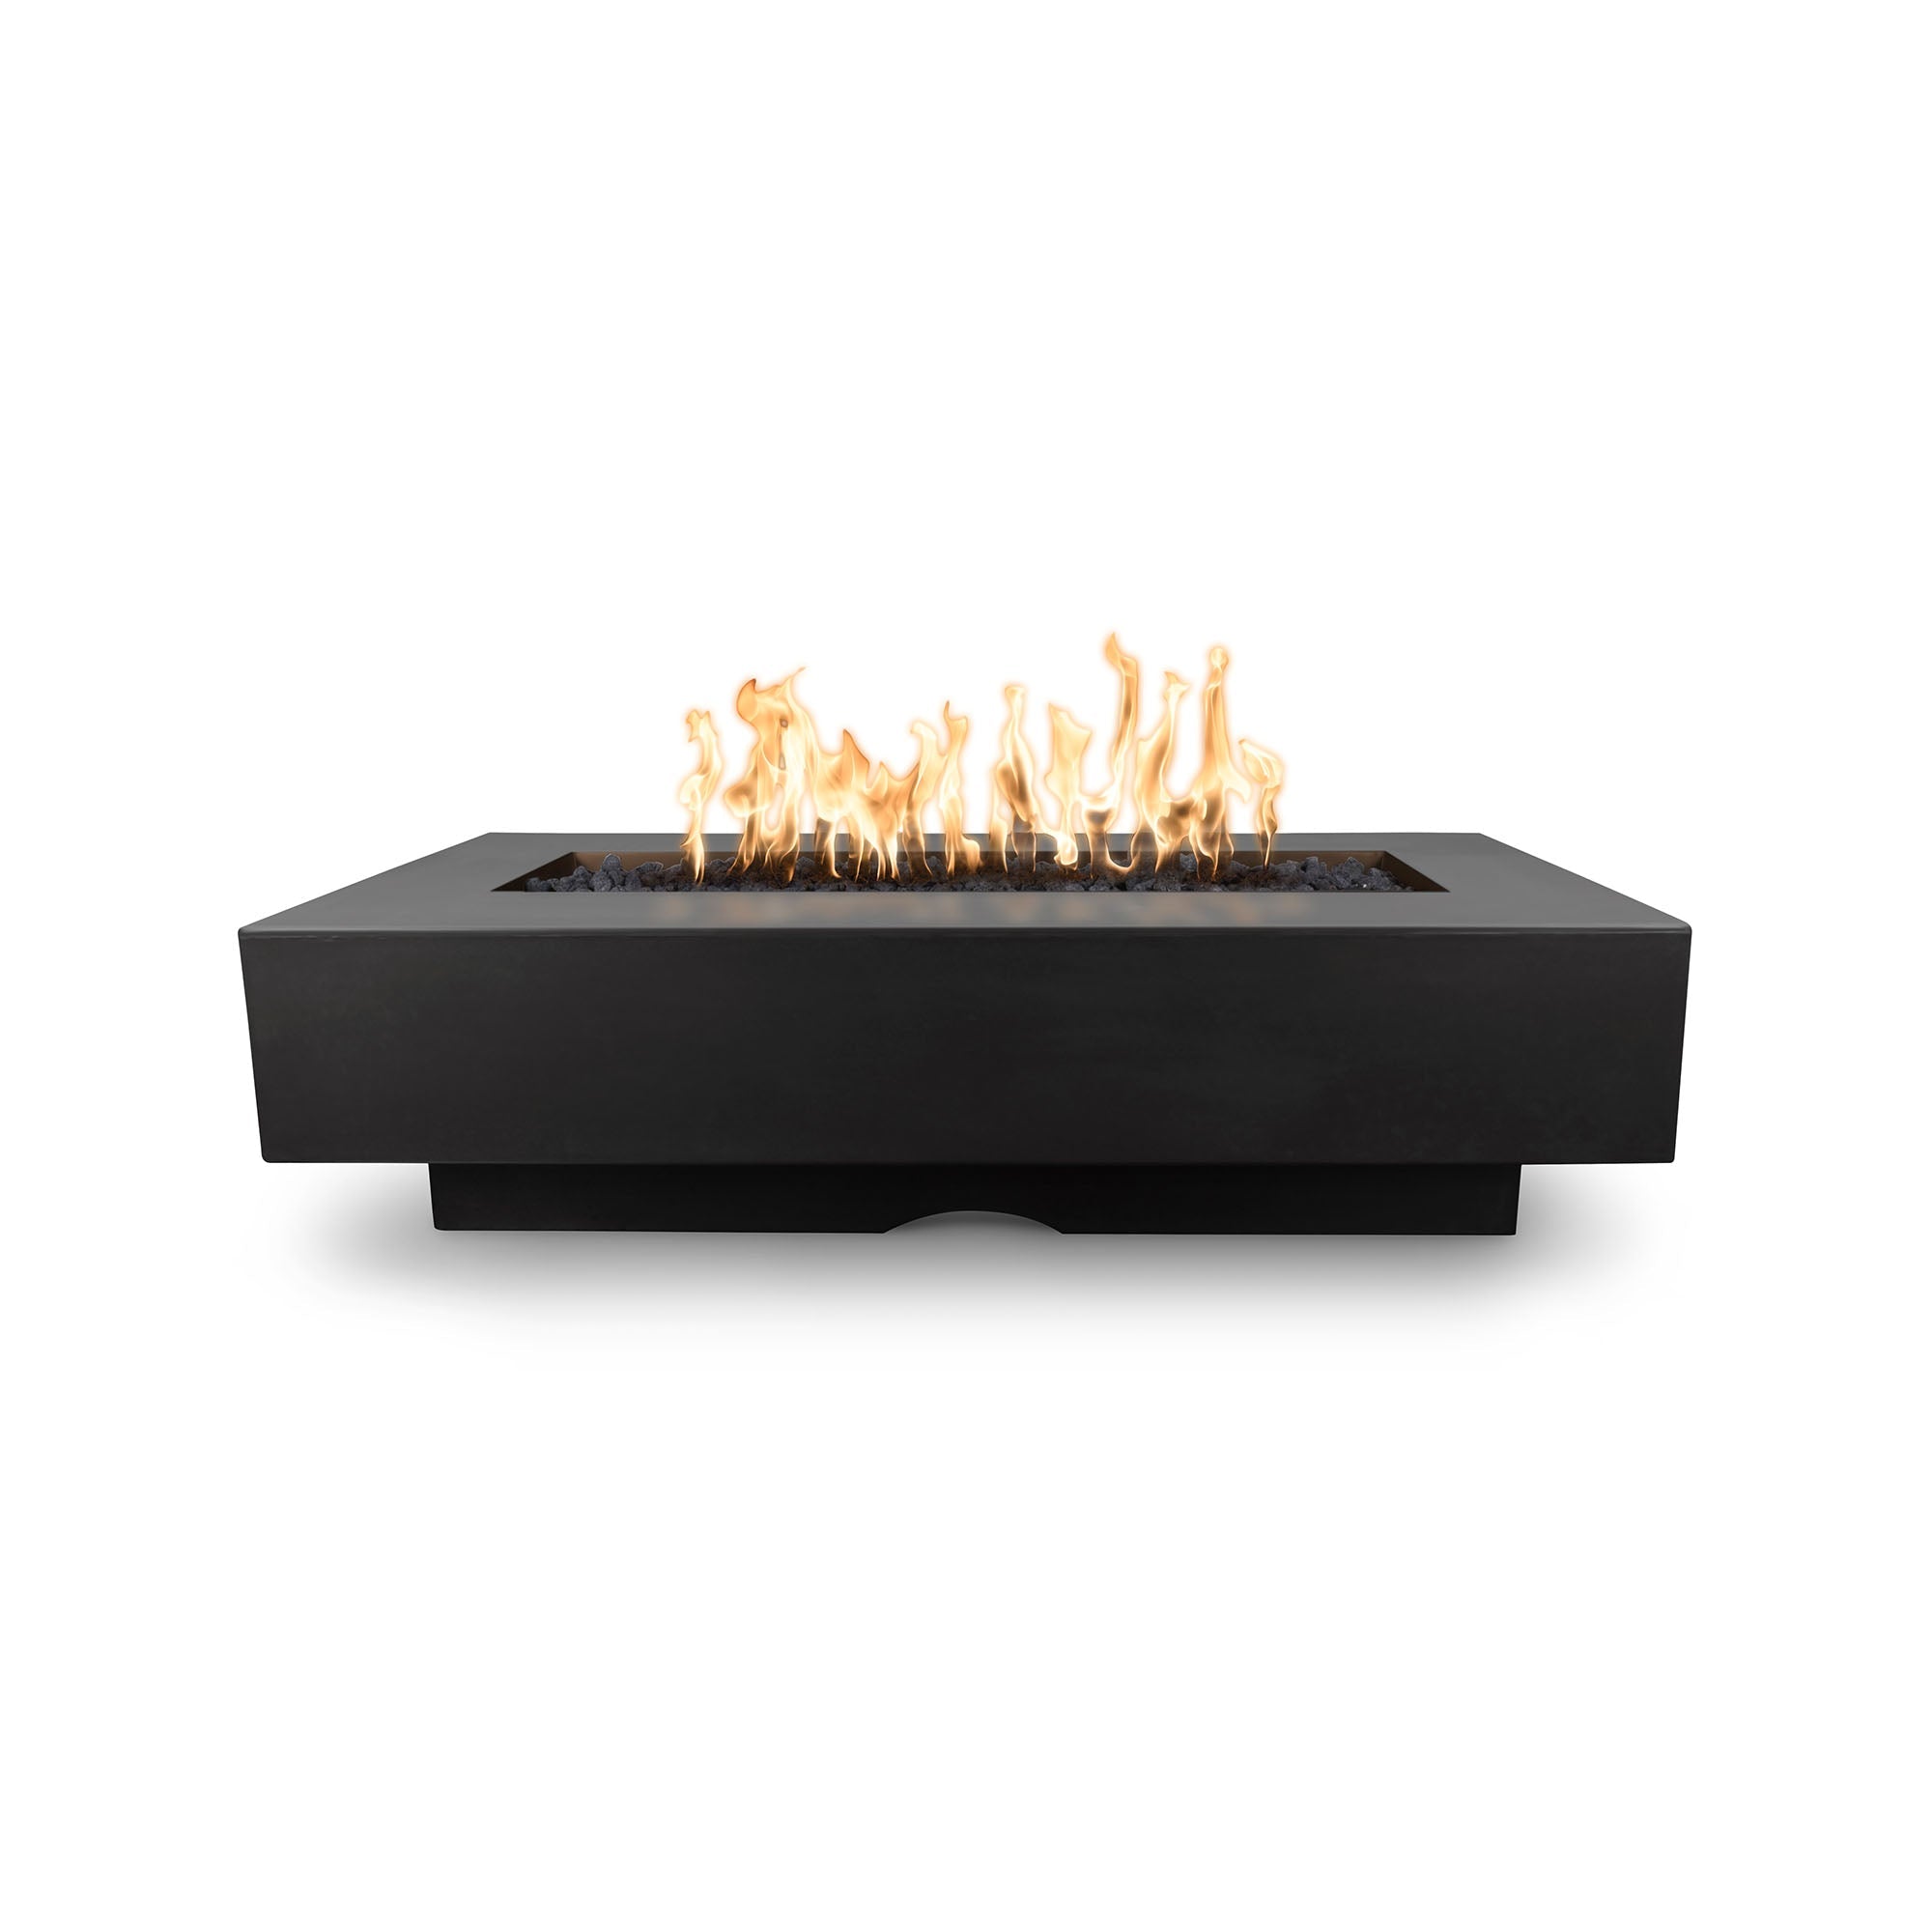 The Outdoor Plus 48" Del Mar GFRC Concrete Rectangle Fire Pit Table in Black